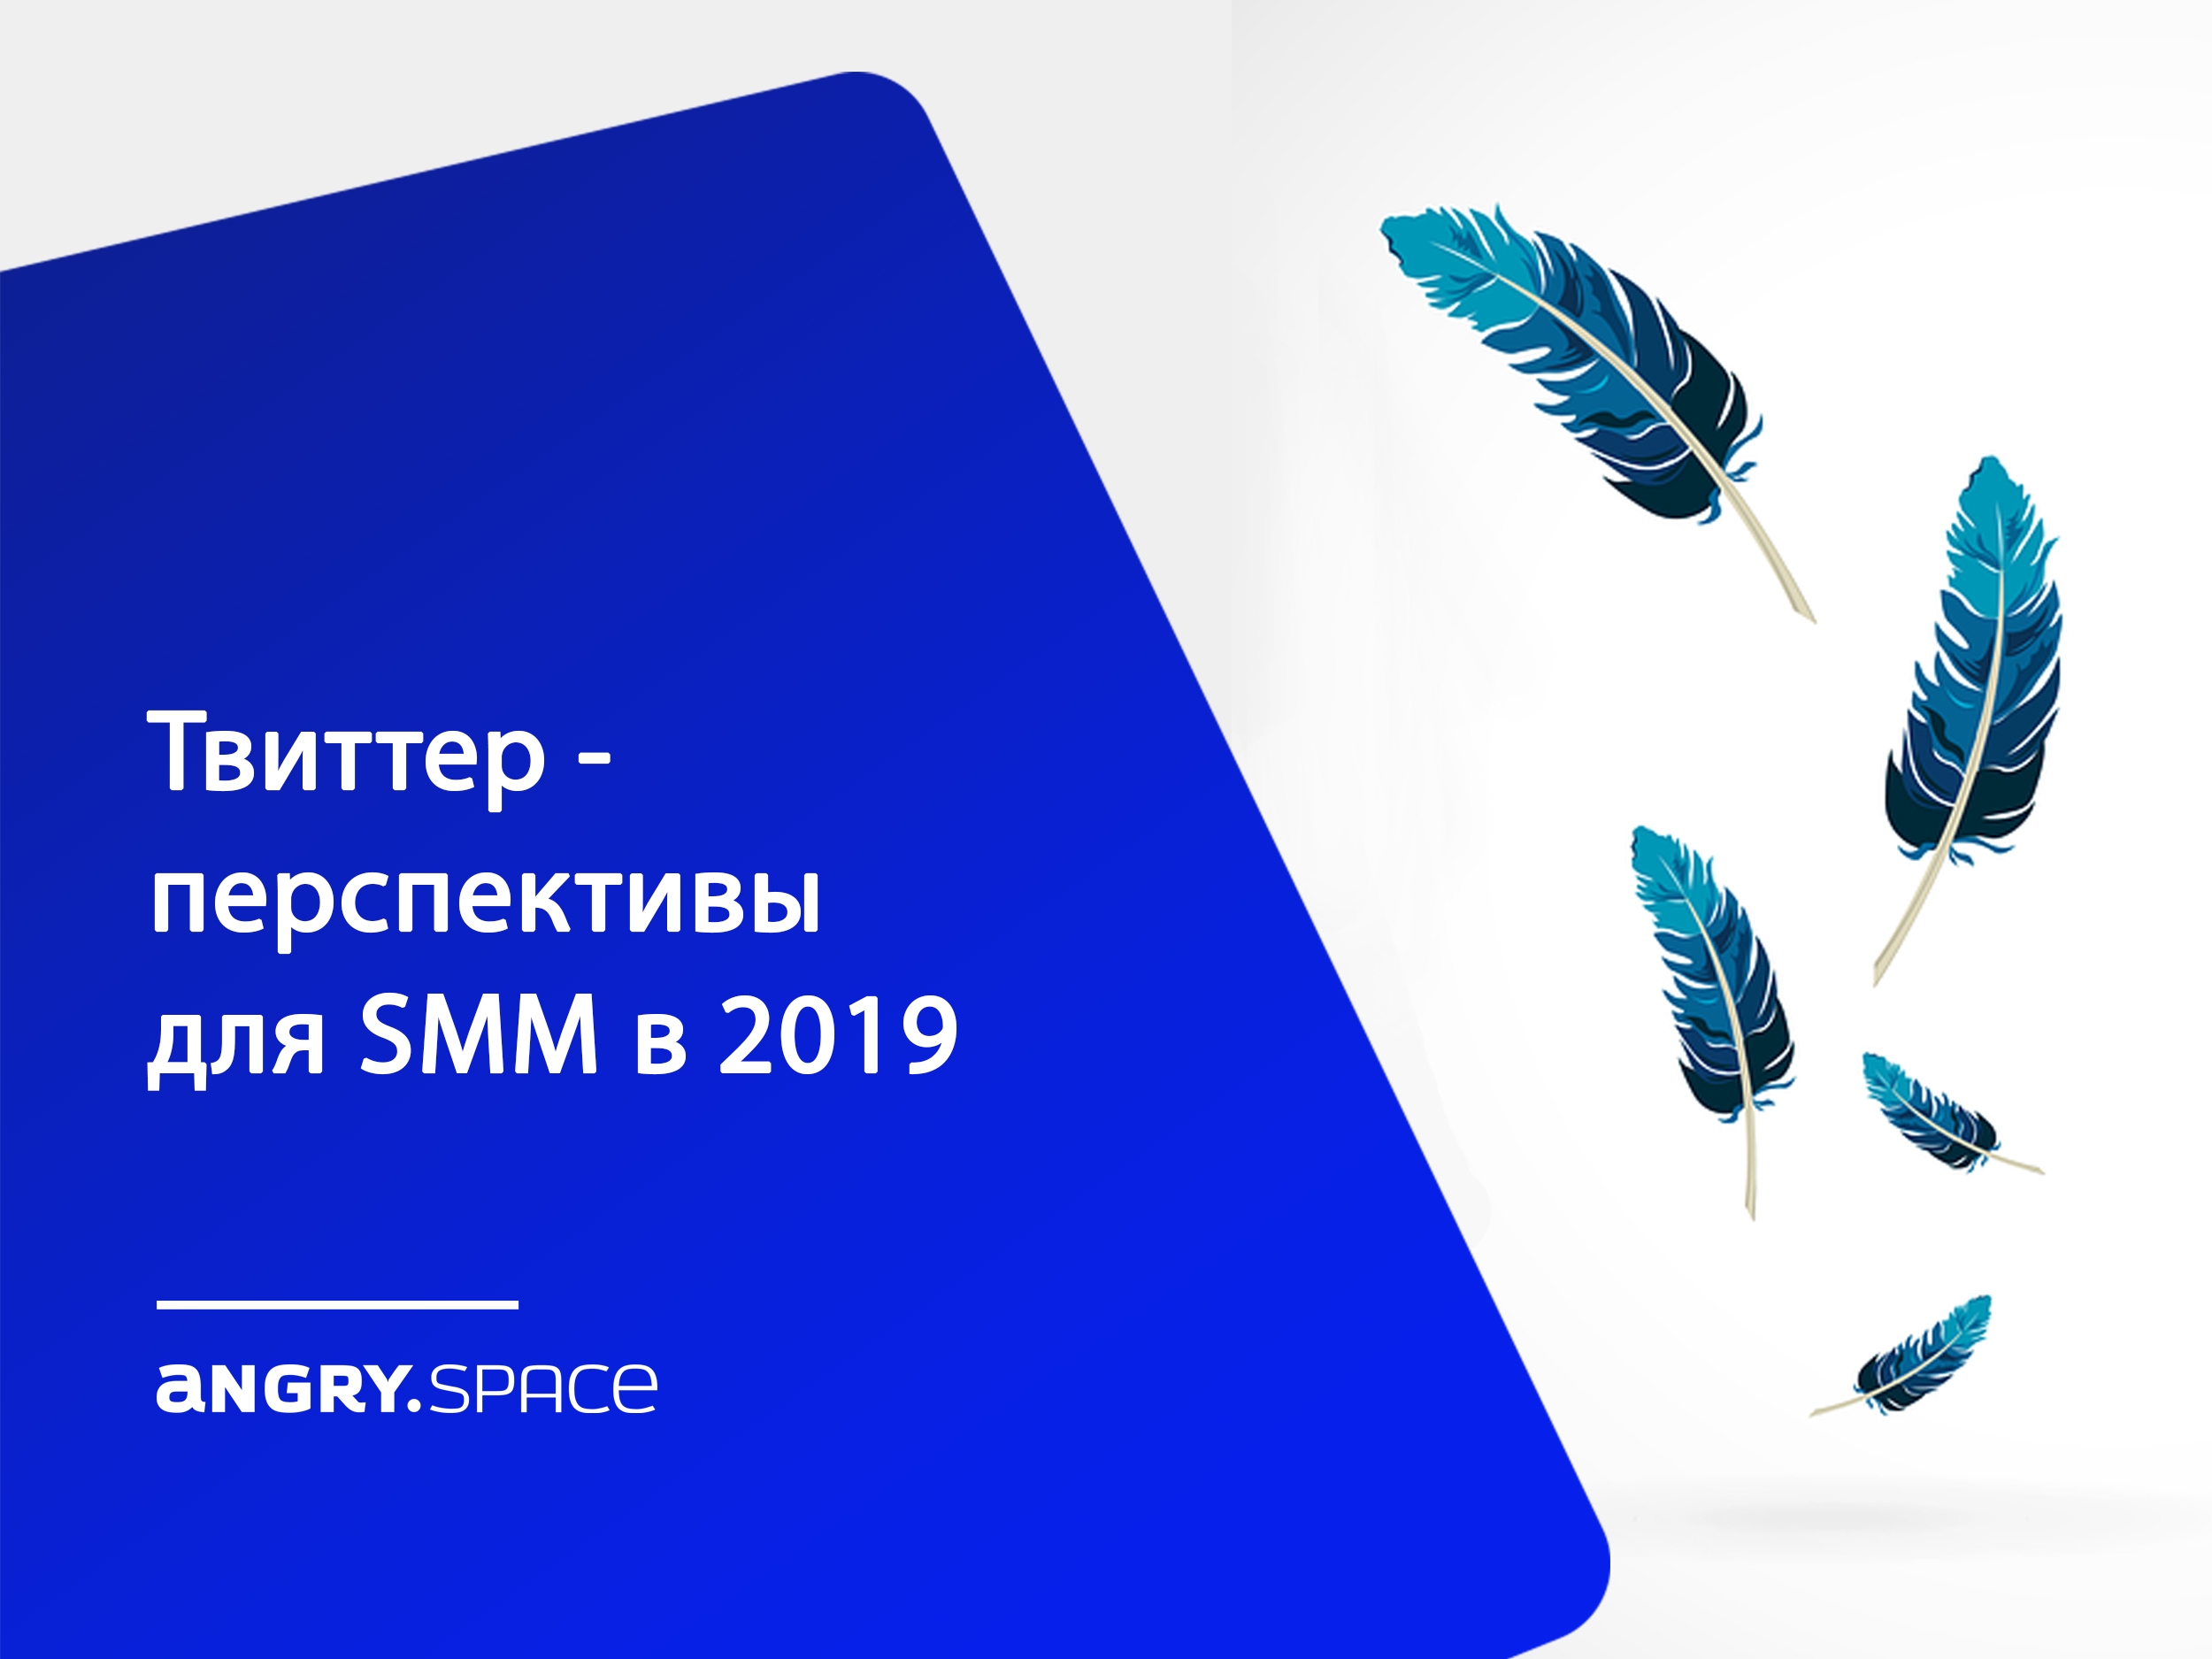 Twitter - перспективы для SMM в 2019